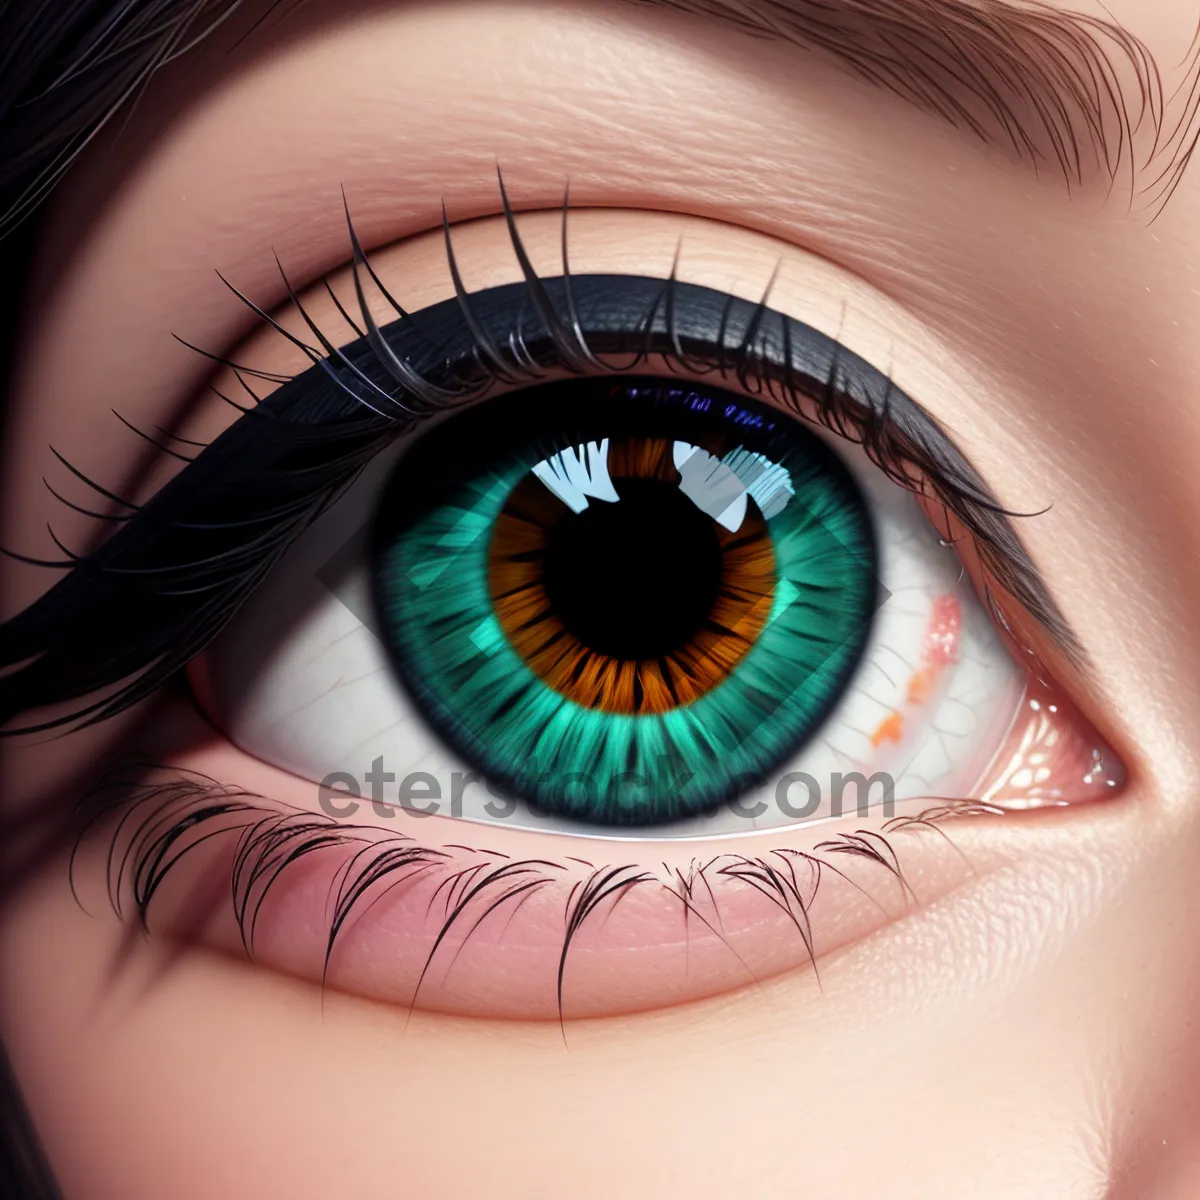 Picture of Vibrant Eye - Mesmerizing Closeup of Human Iris